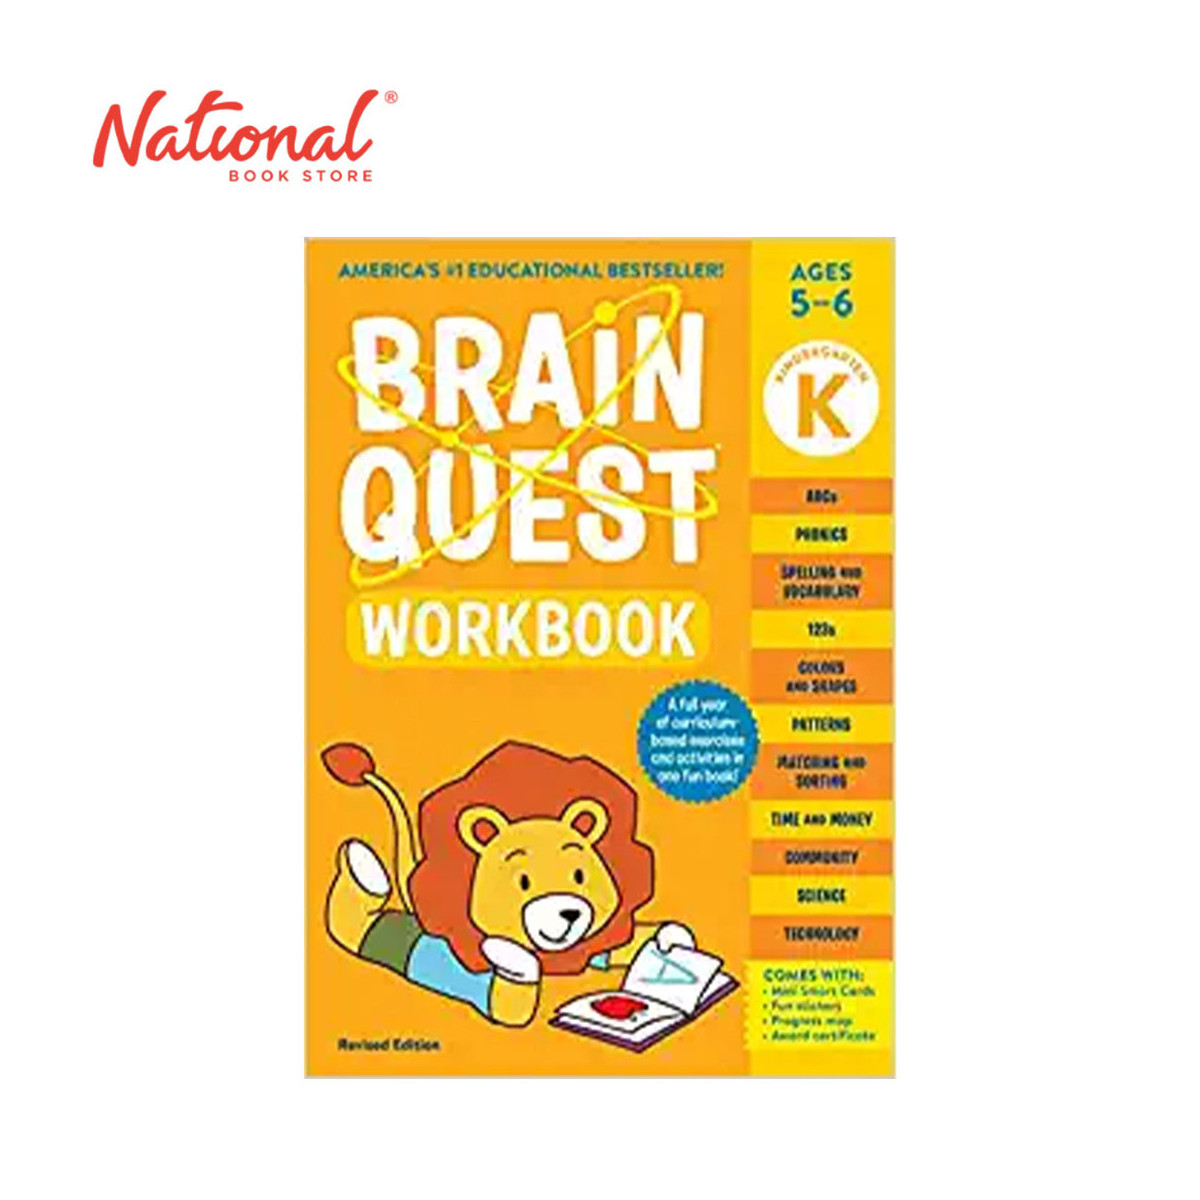 Brain Quest Workbook: Kinder Revised Edition - Trade Paperback - Activity Books for Kids